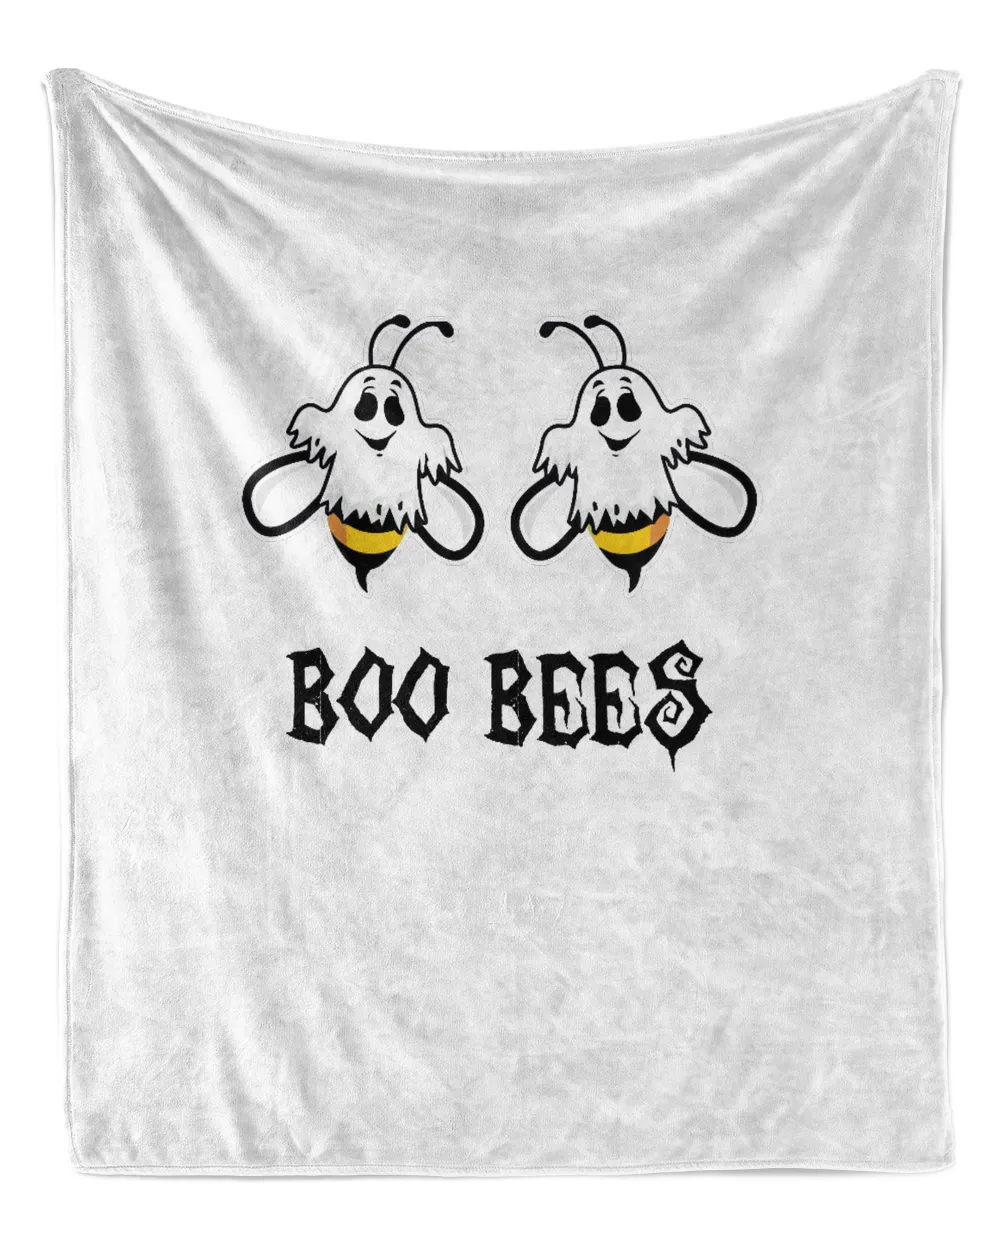 Boo Bees Funny Halloween Bee Lovers Sarcastic